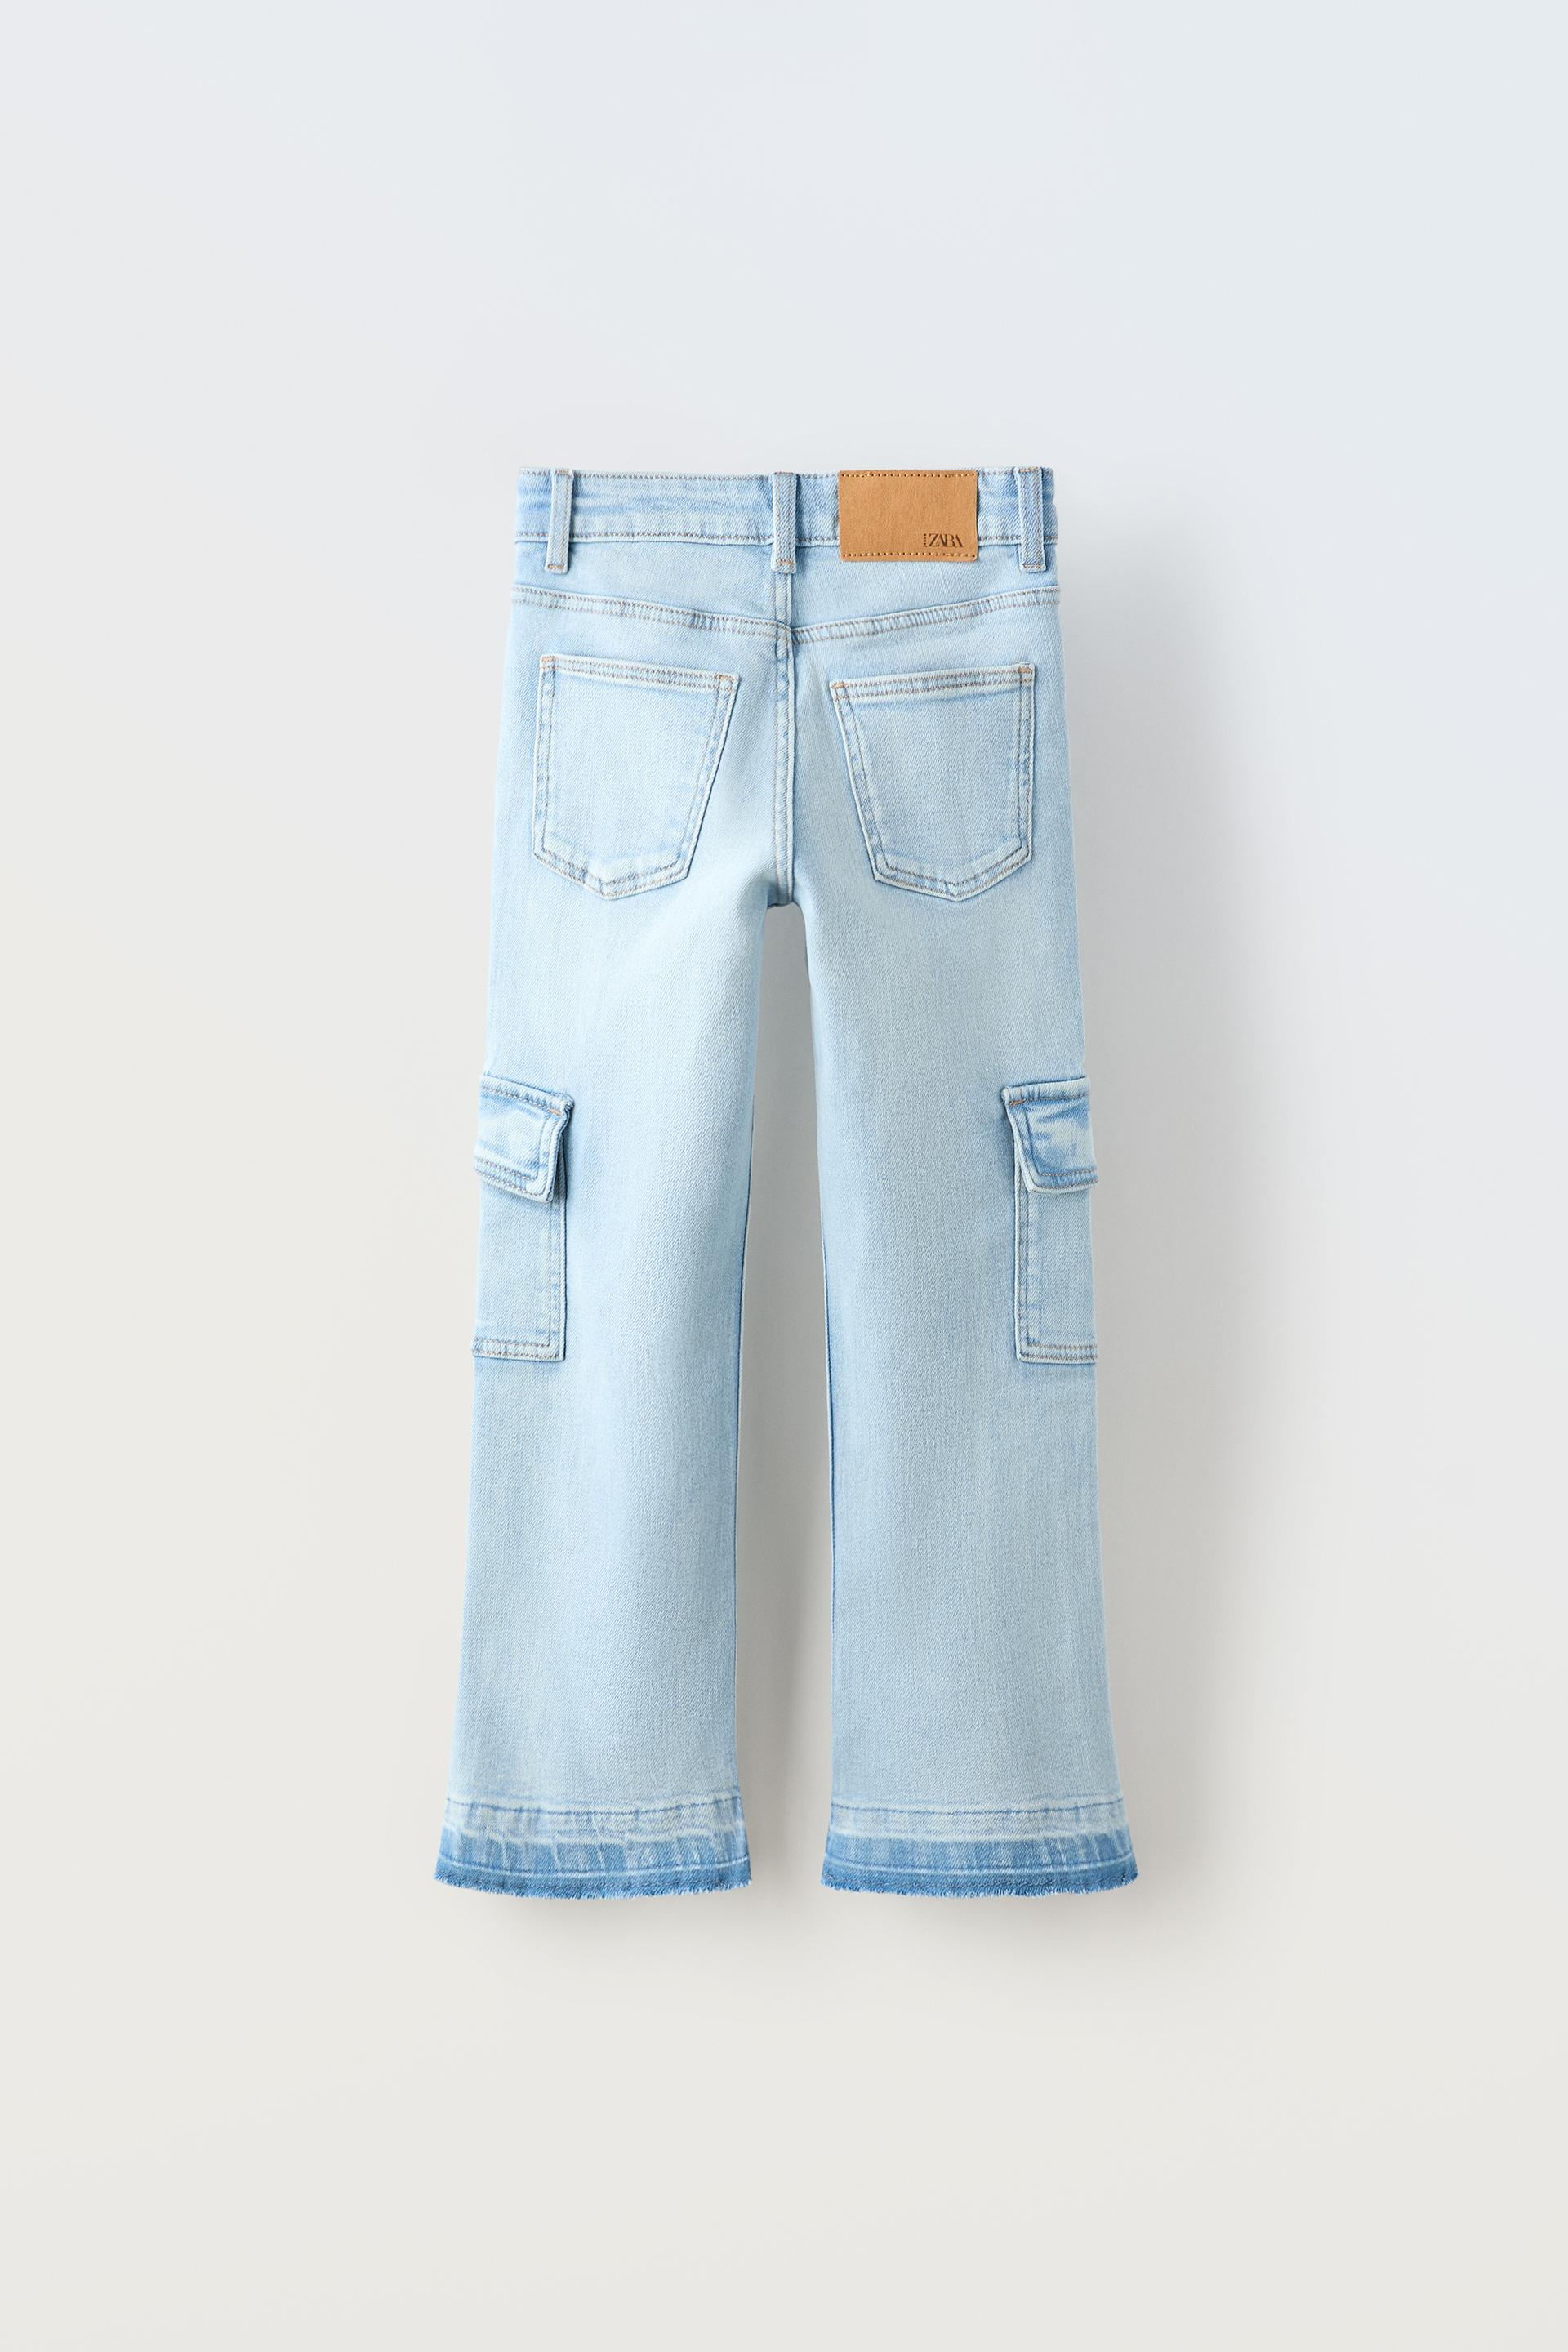 Zara cargo Jeans now available. Price-$8500 Sizes- S M L #AllThingsXhibitK